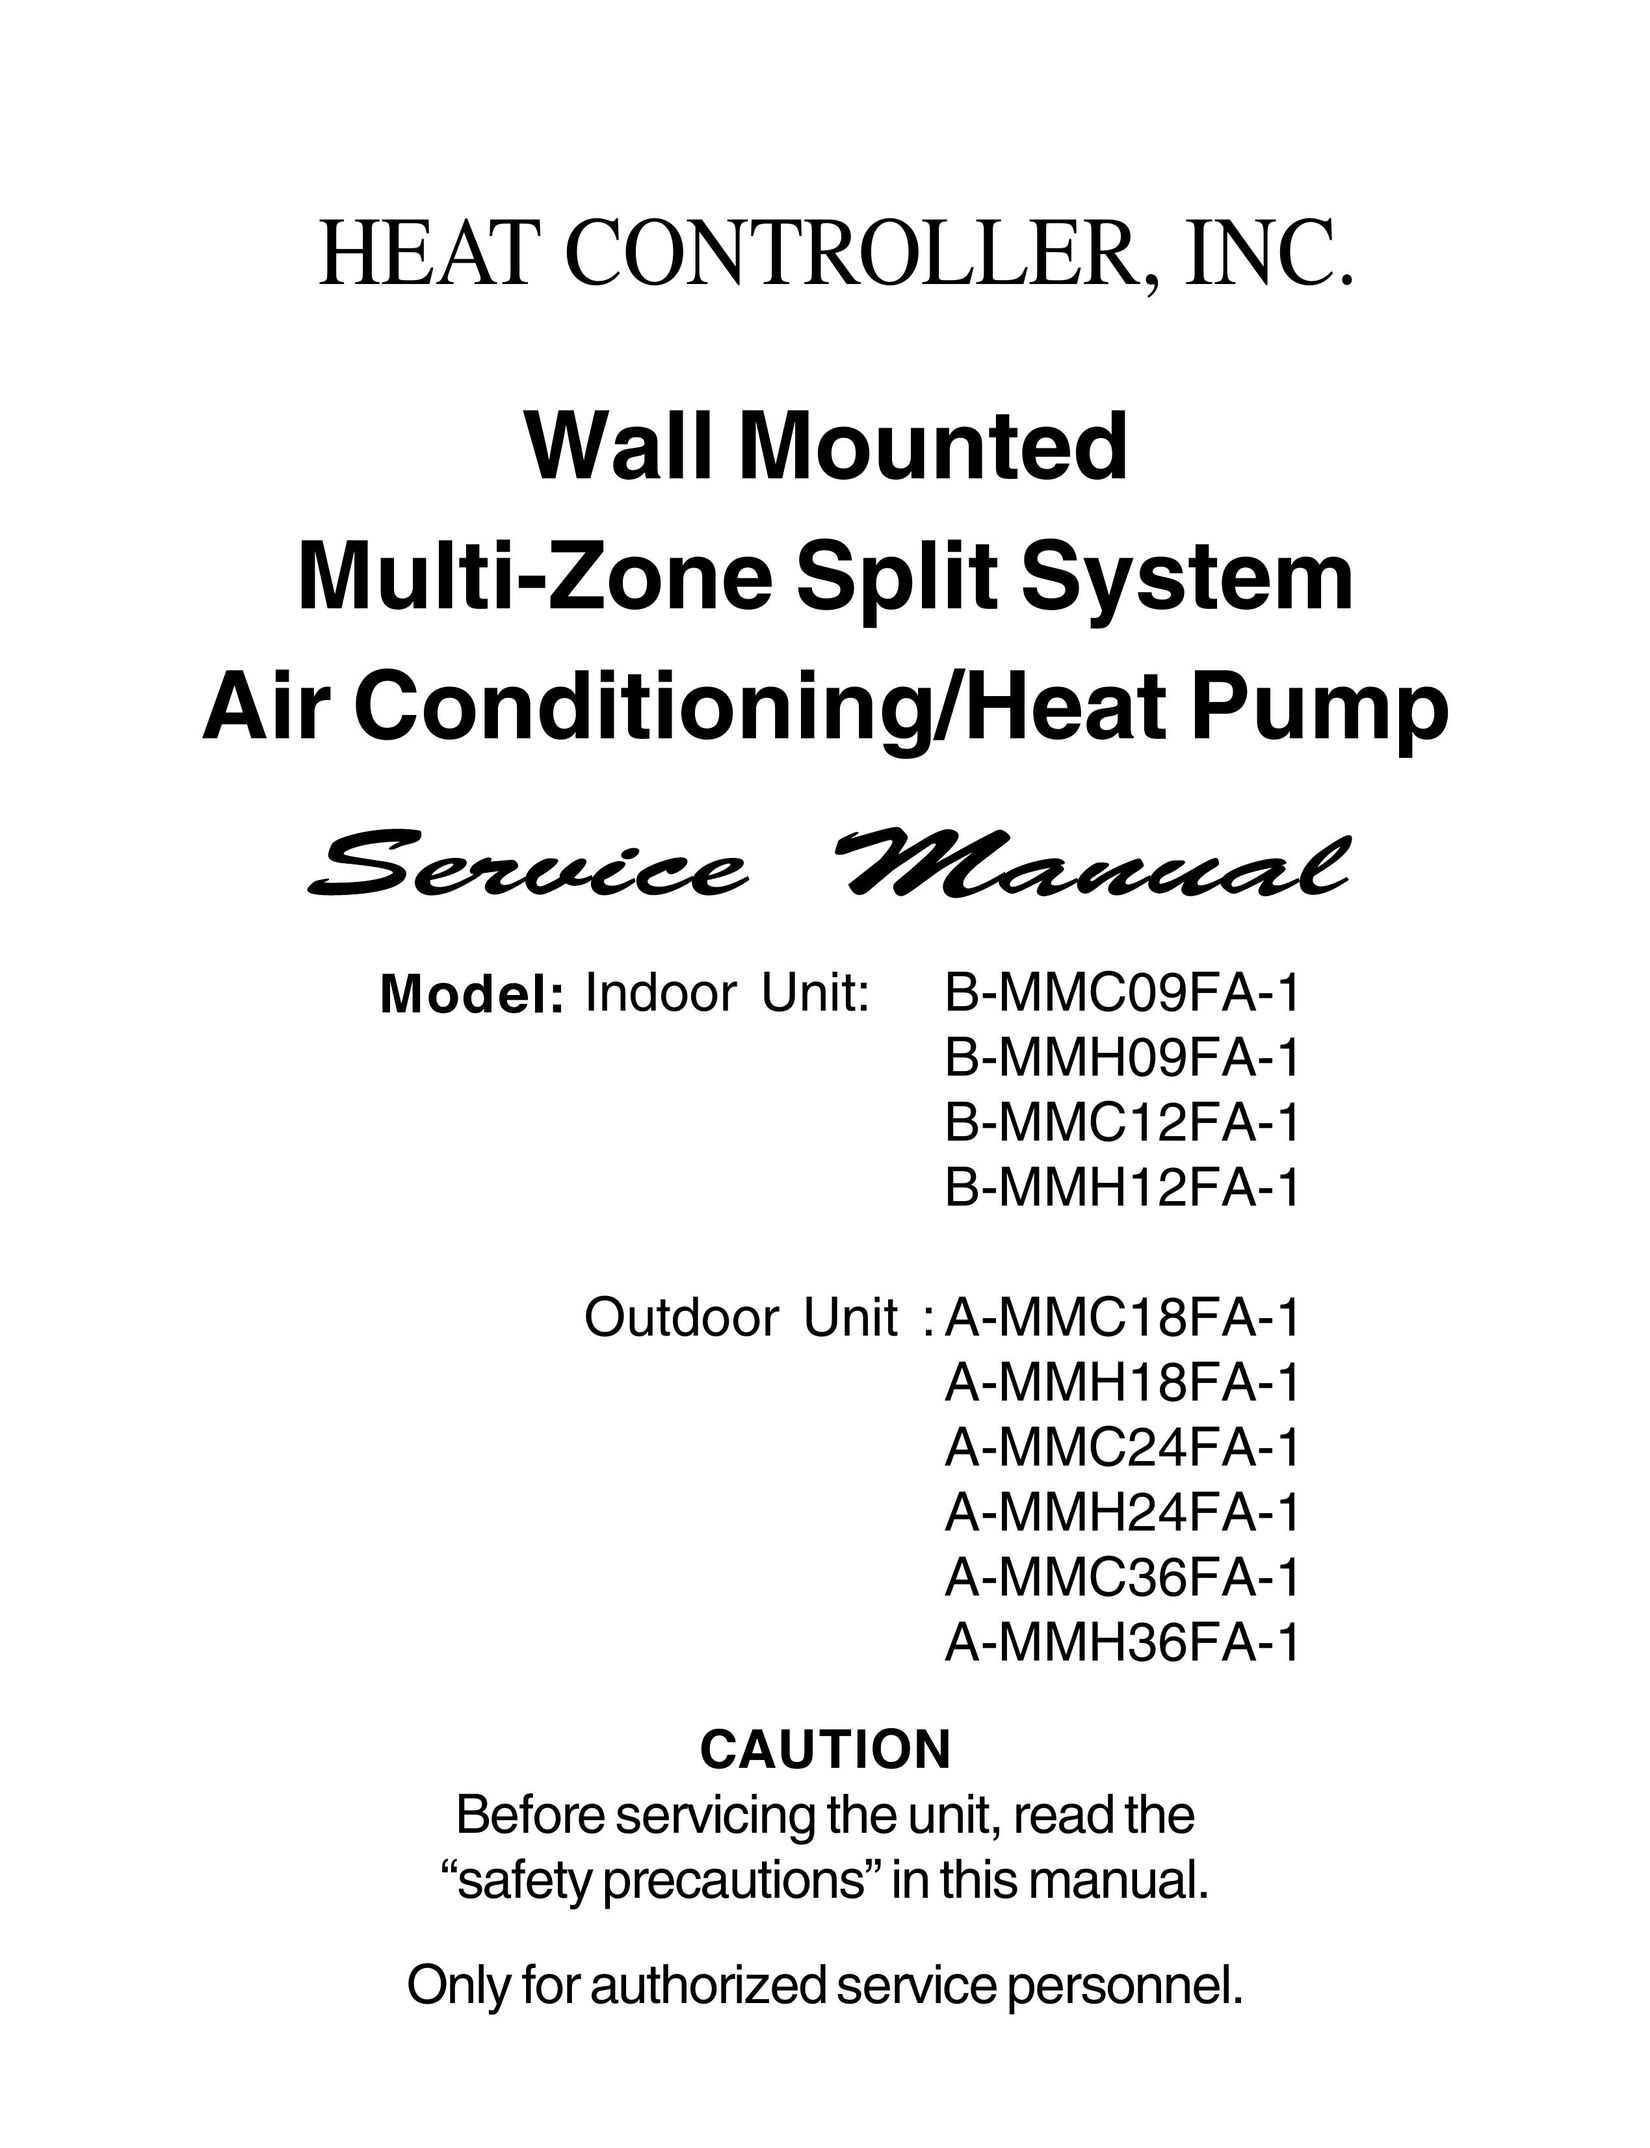 Heat Controller A-MMC36FA-1 Air Conditioner User Manual